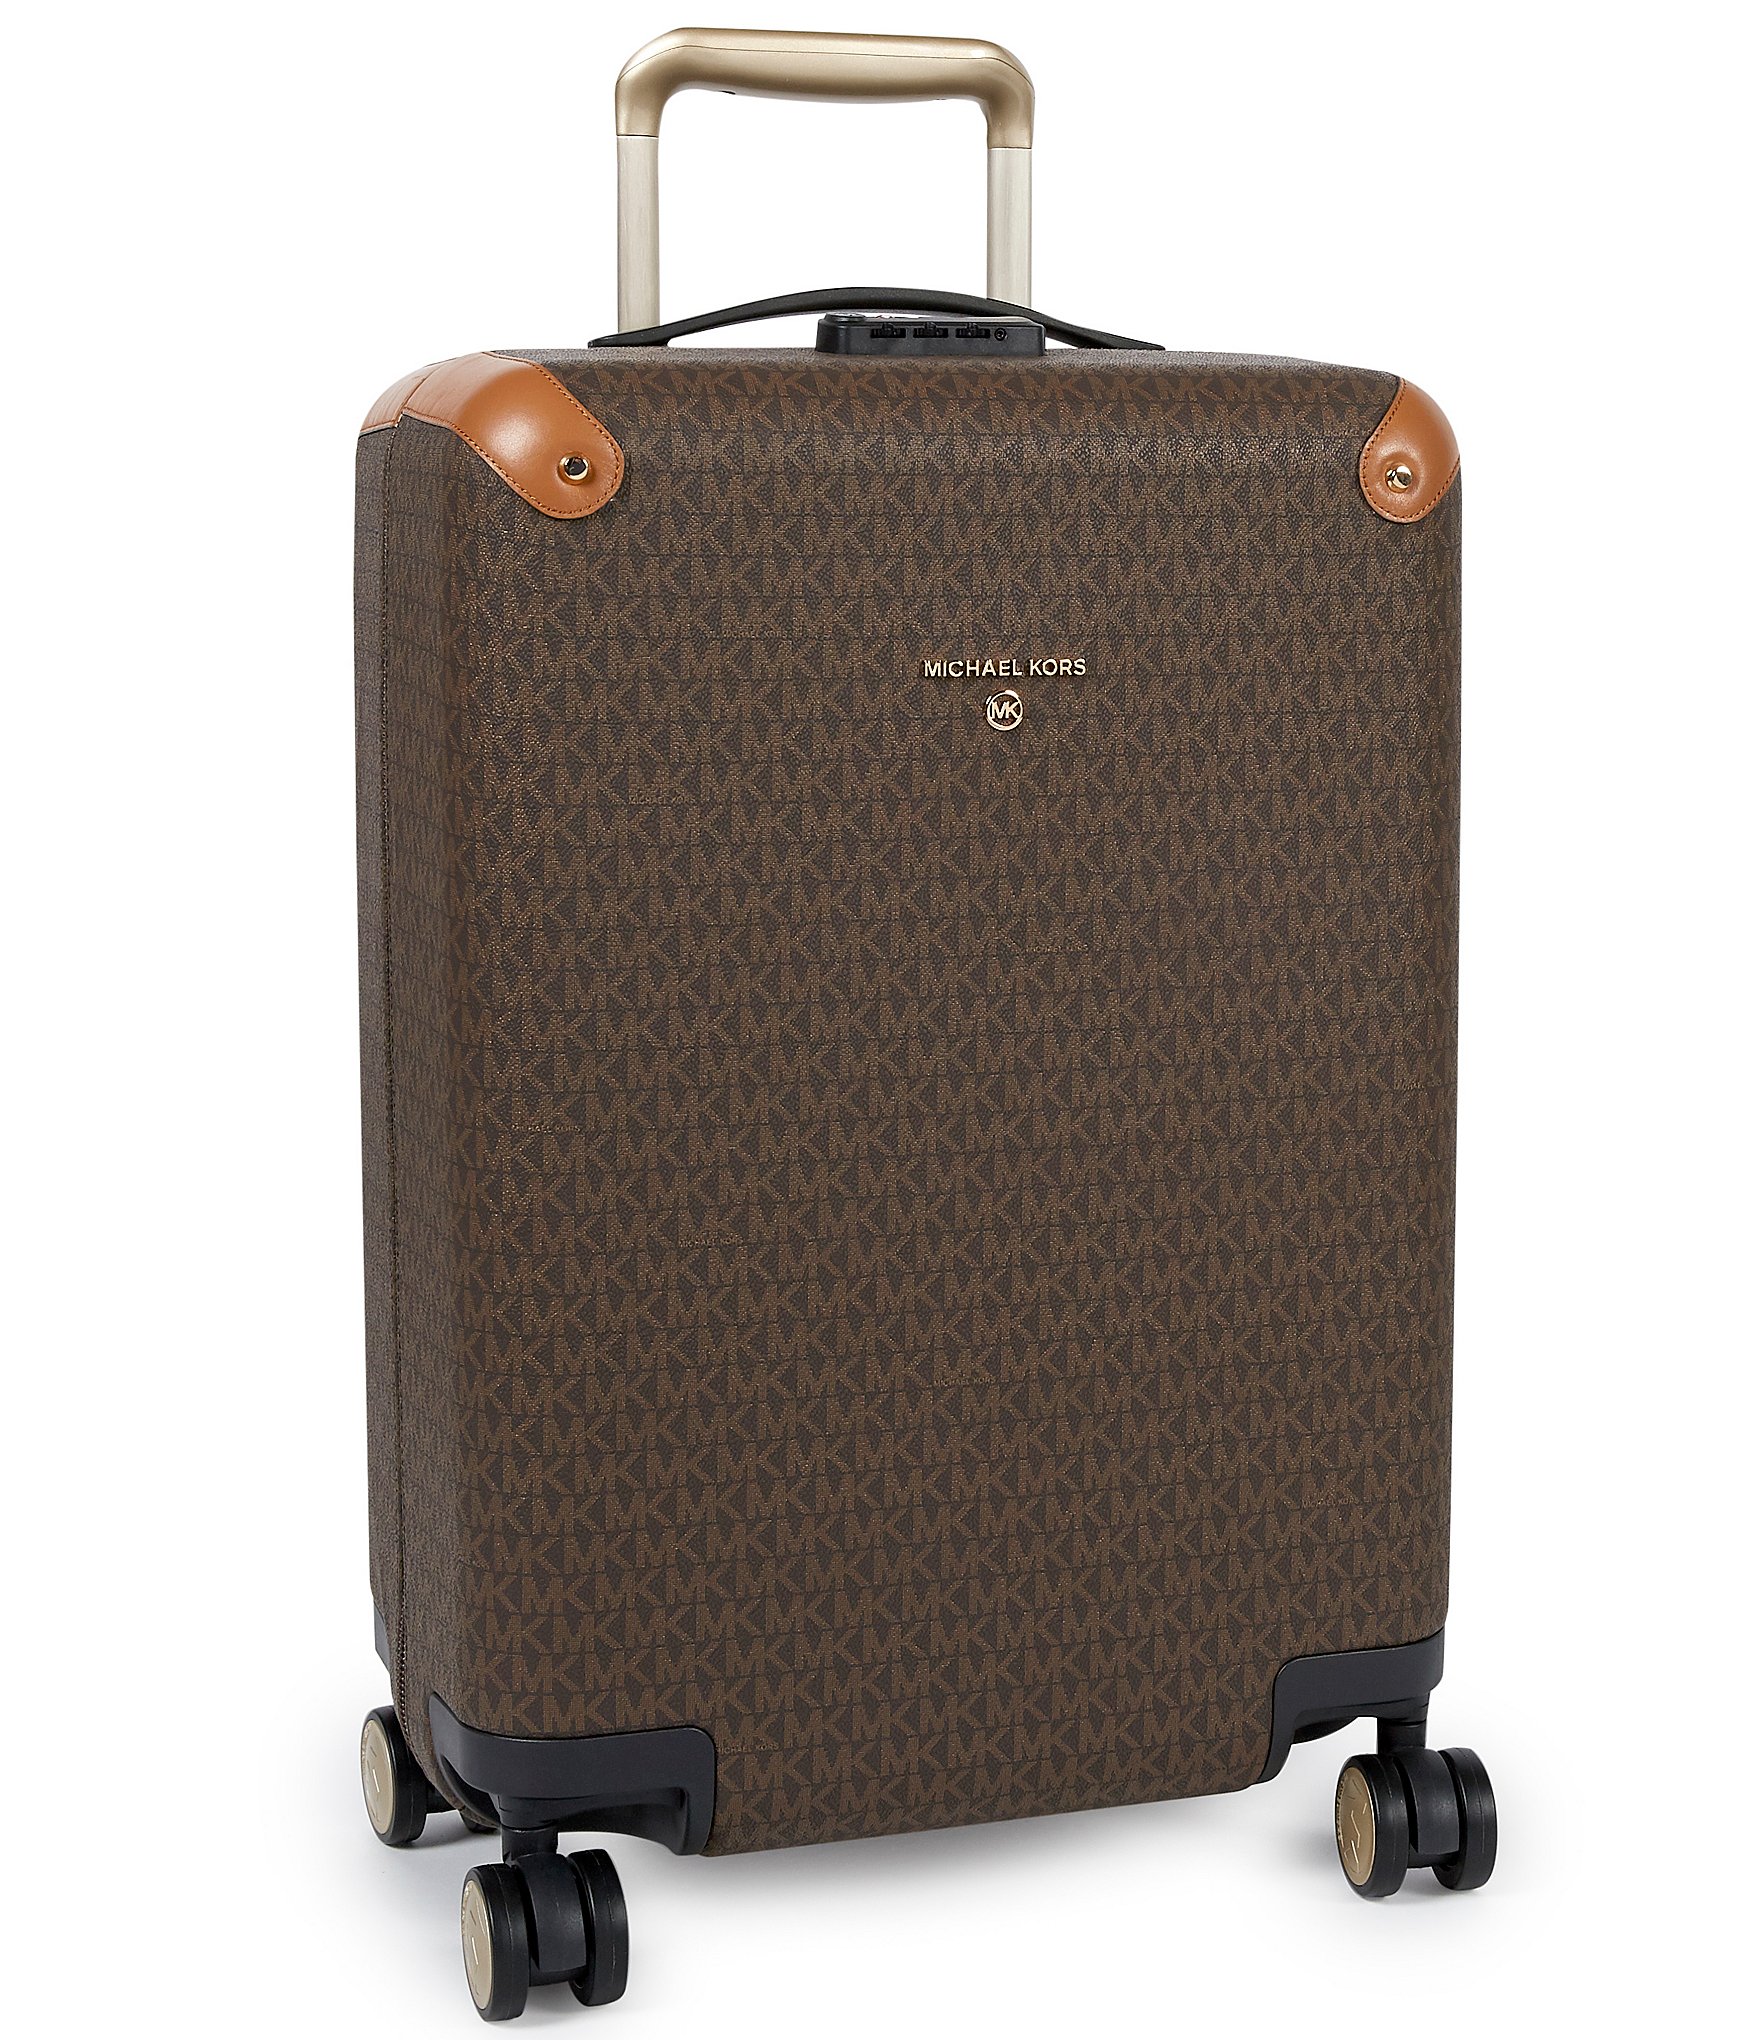 Michael Kors Travel Large Duffle Bag in PVC Signature (Vanilla)